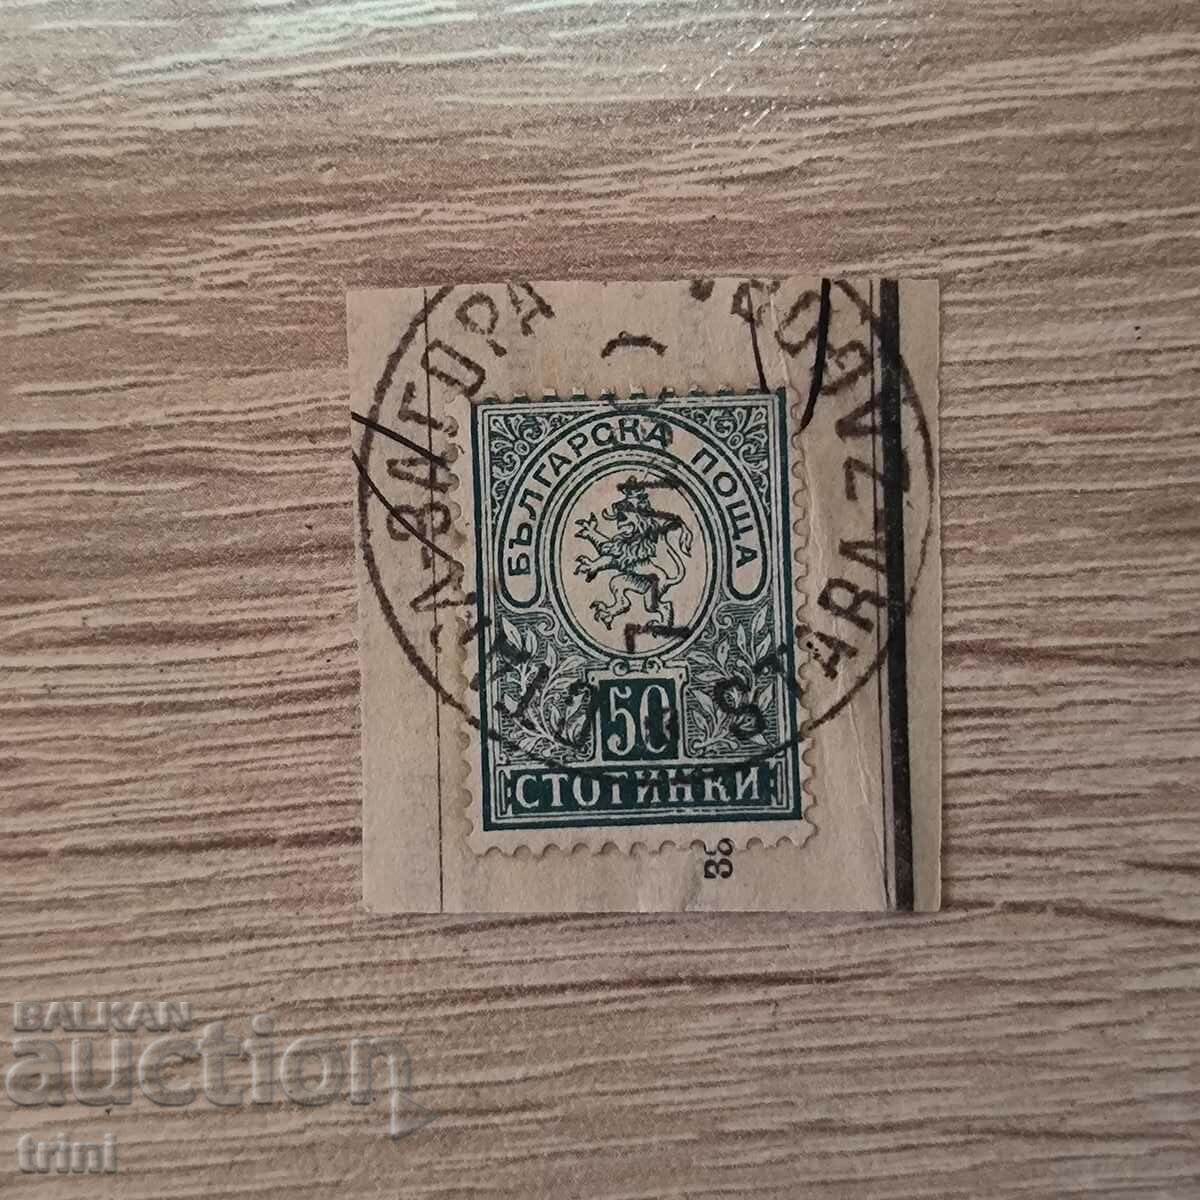 Bulgaria Small lion 1889 50 cents stamp Stara Zagora